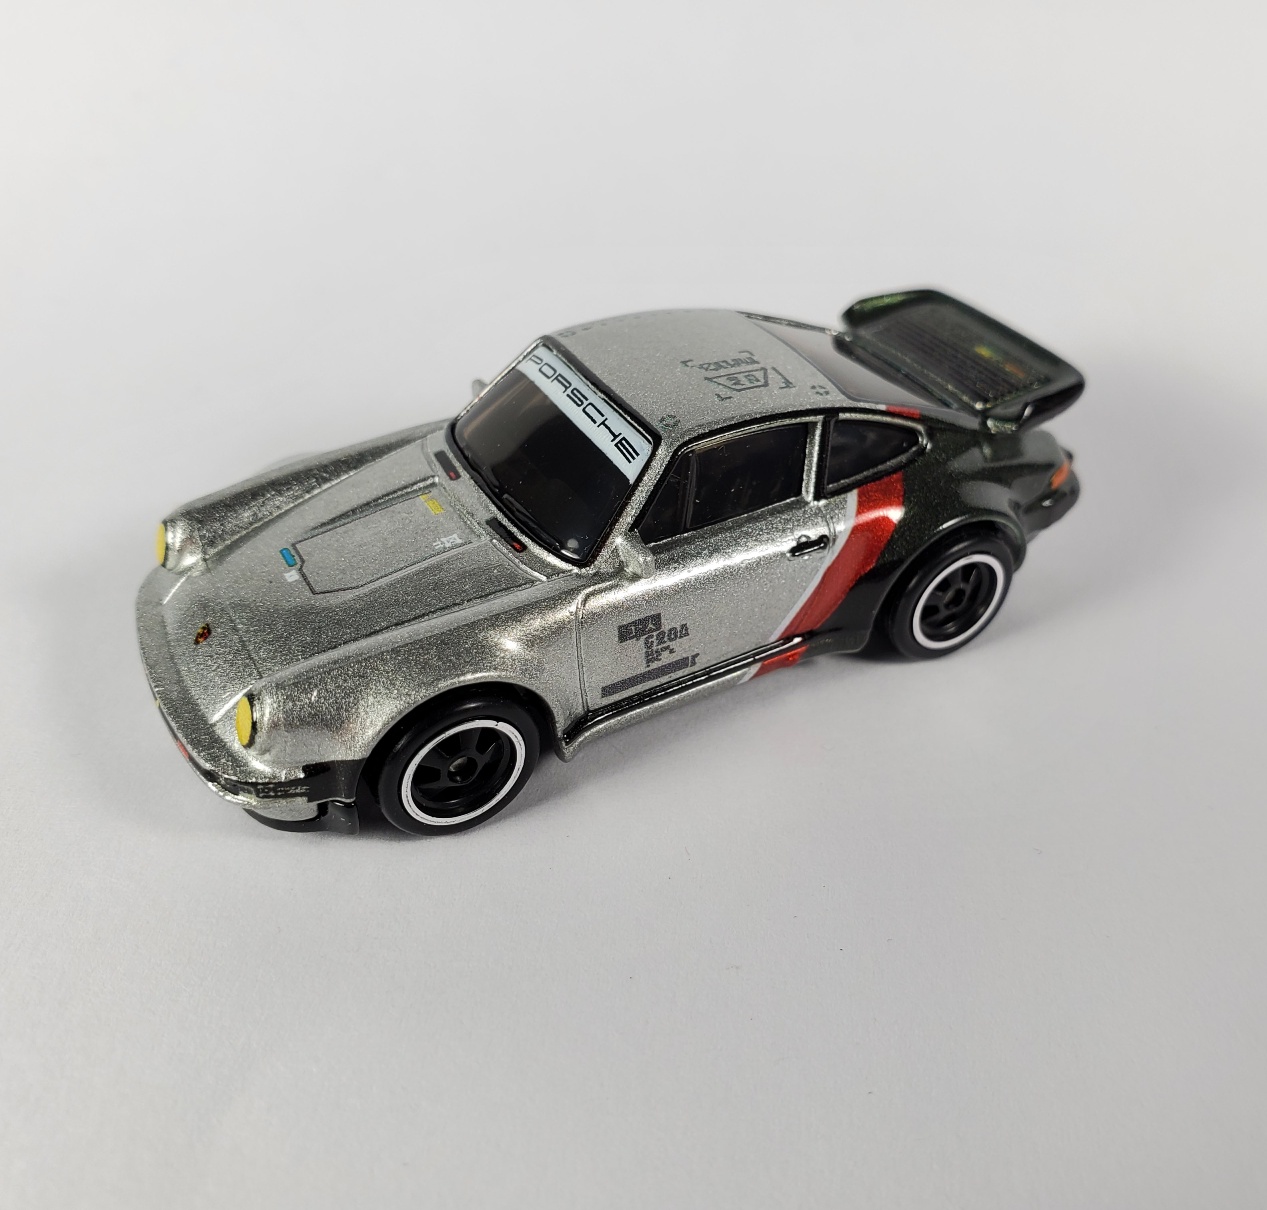 Hot Wheels · Hot Wheels Premiums Porsche 911 Turbo 930 (MERCH) (2022)